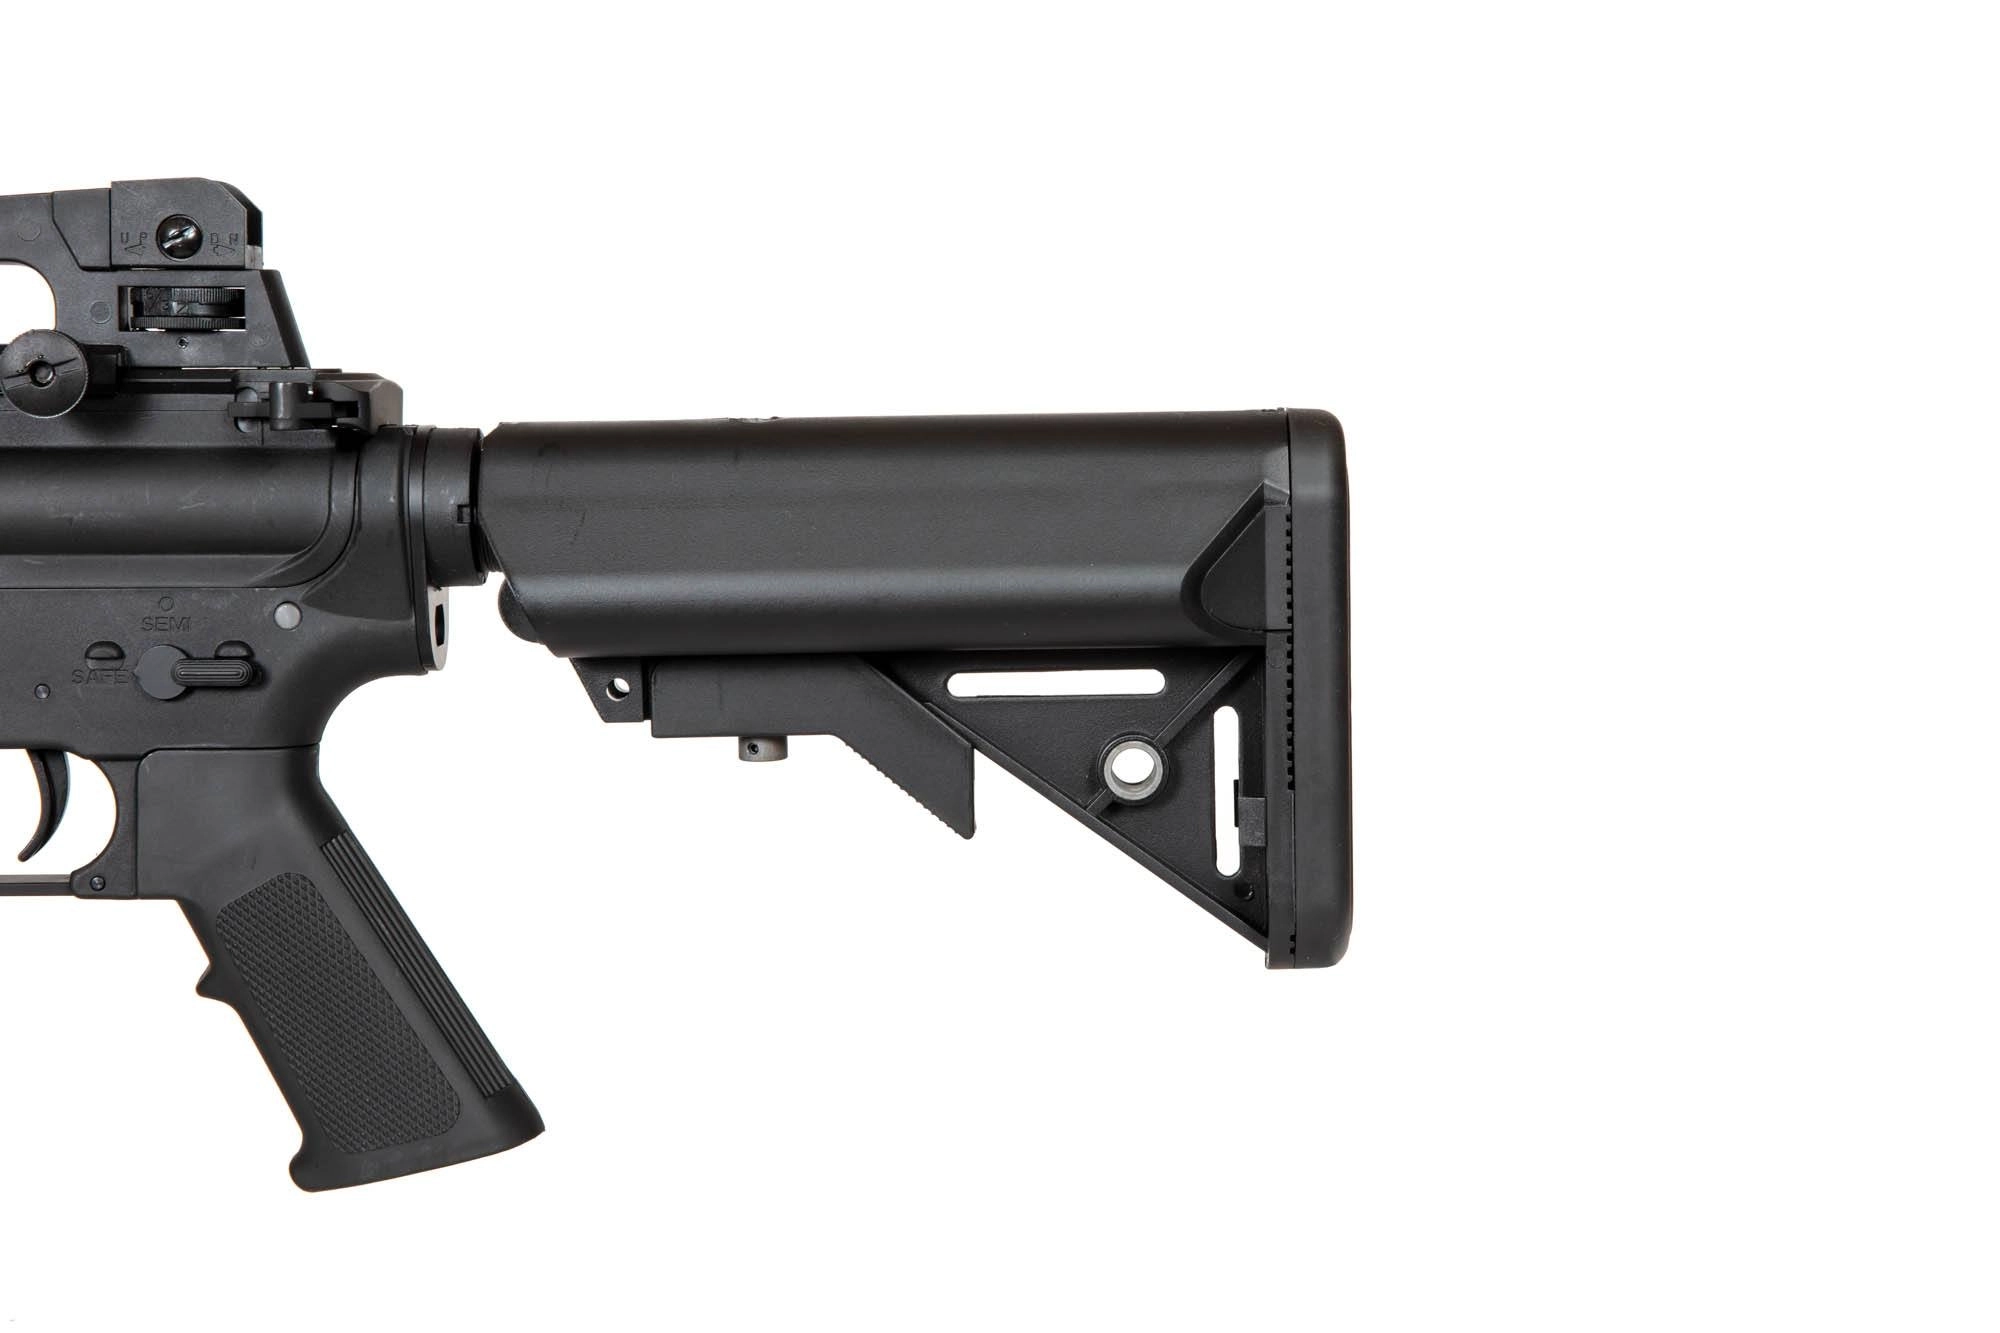 Specna Arms SA-C01 CORE sähköase - musta